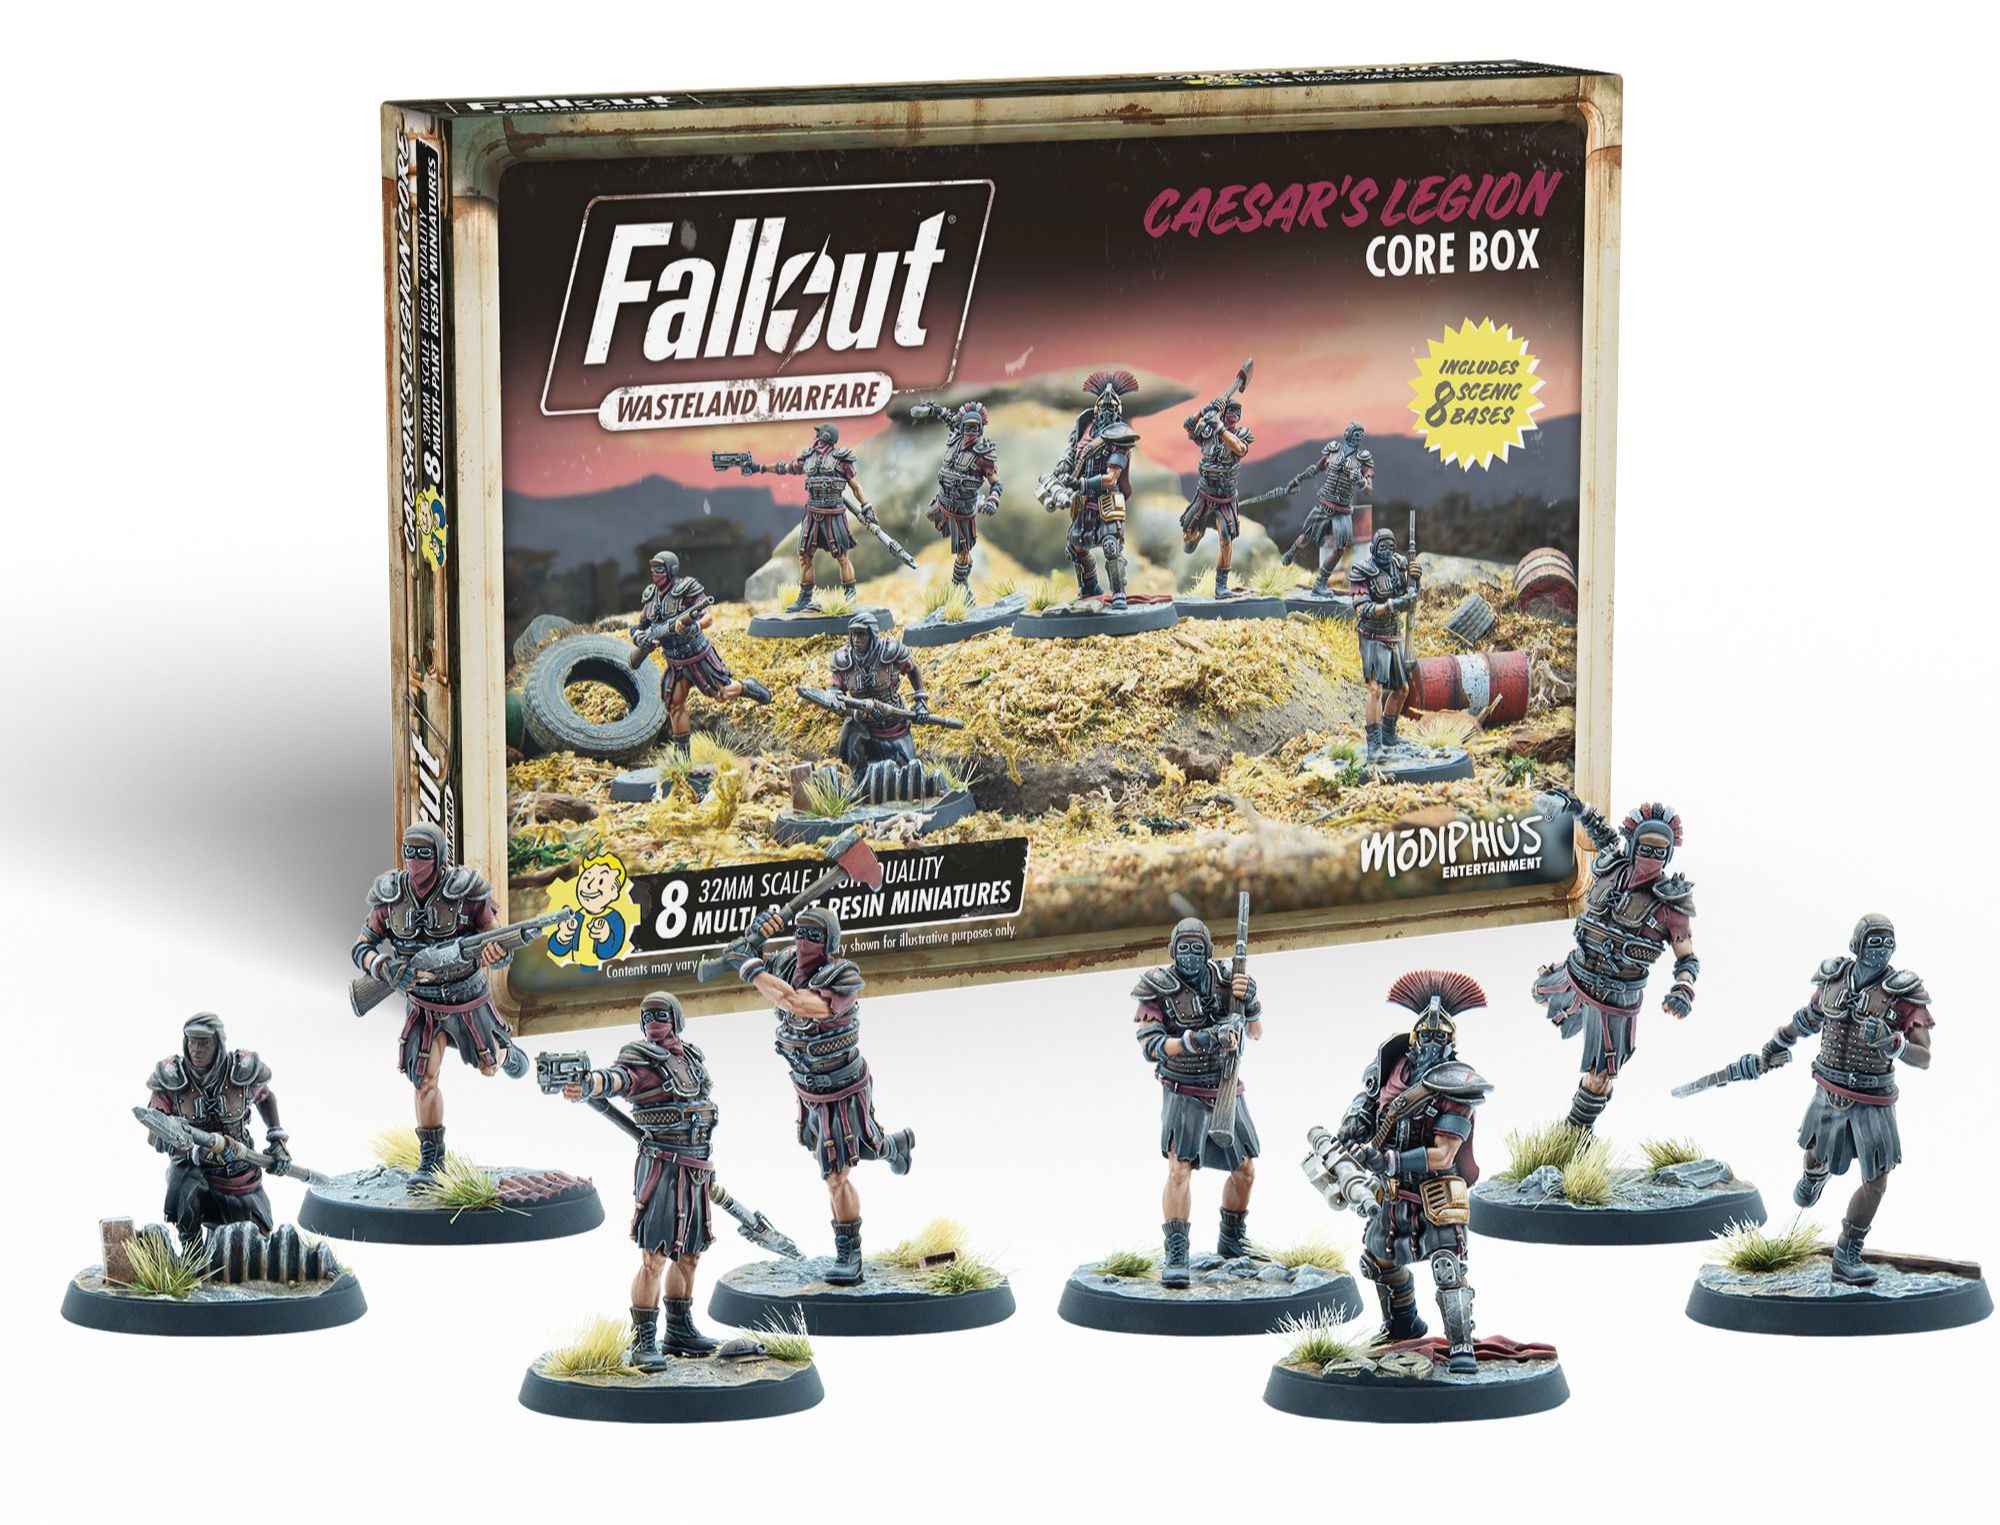 Fallout: Wasteland Warfare: Caesars Legion Core Box 